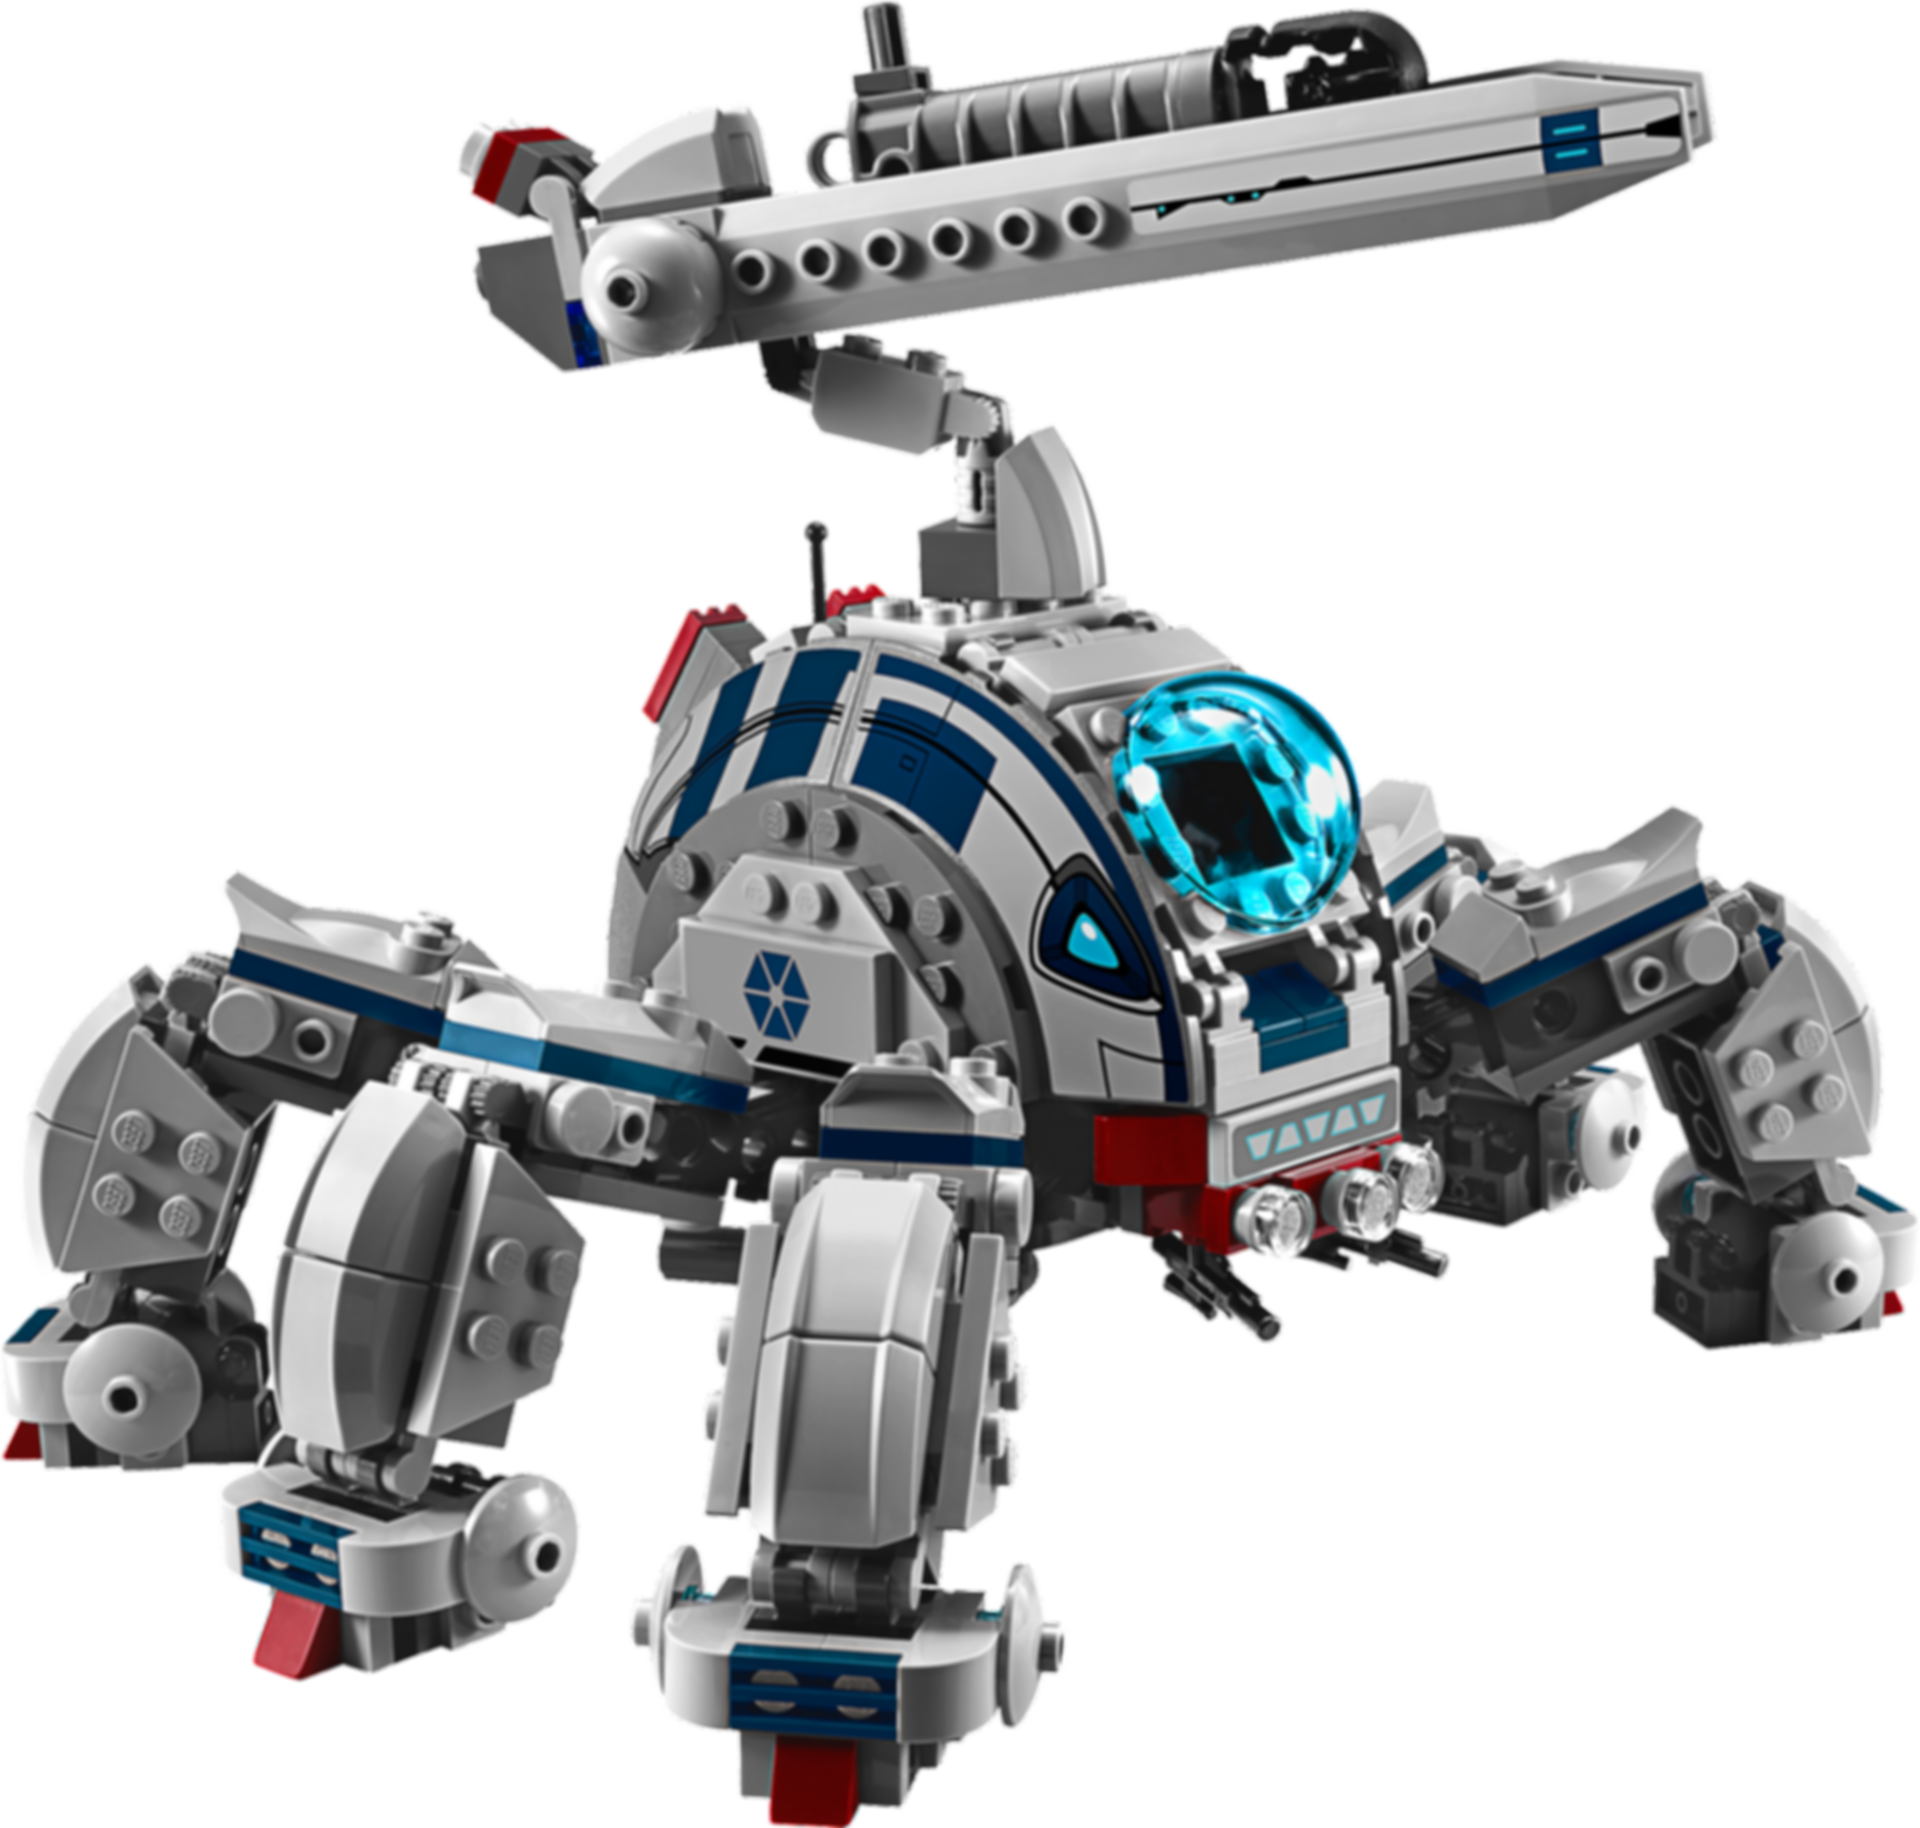 LEGO® Star Wars Umbaran MHC (Mobile Heavy Cannon) componenti